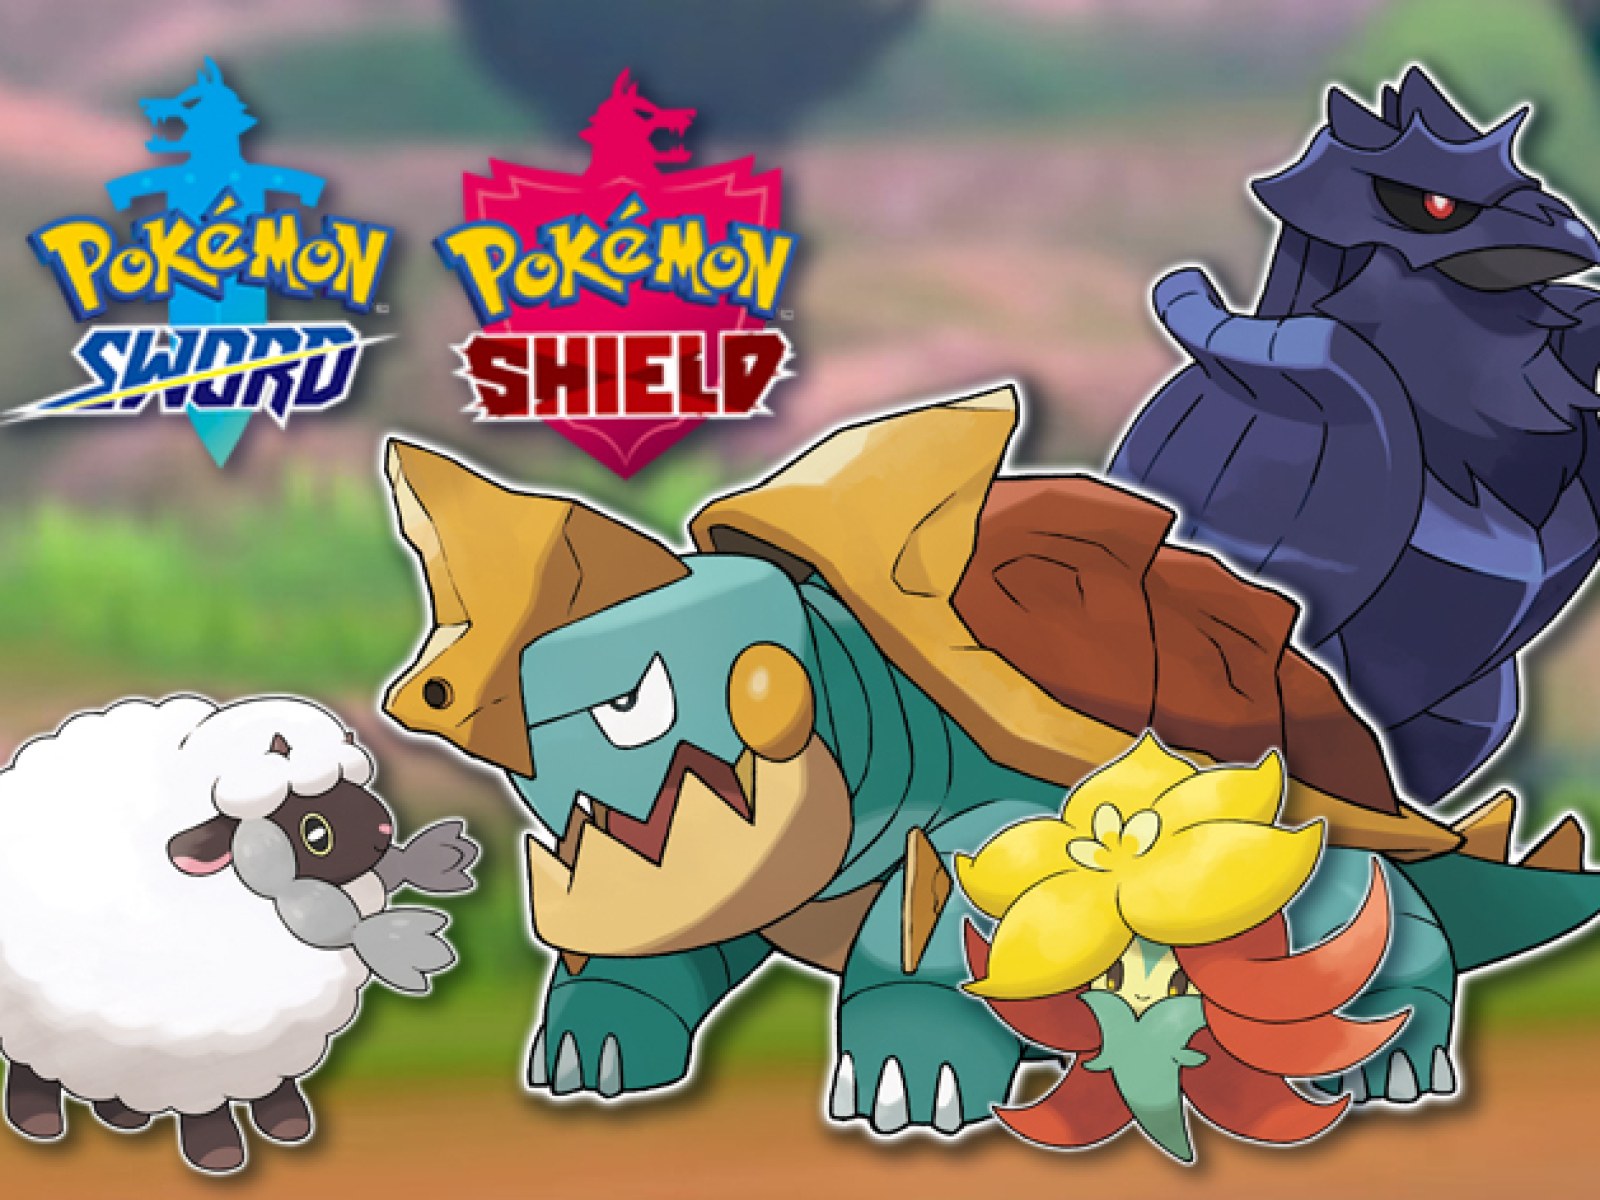 More Details about New Pokémon from Pokémon Sword and Pokémon